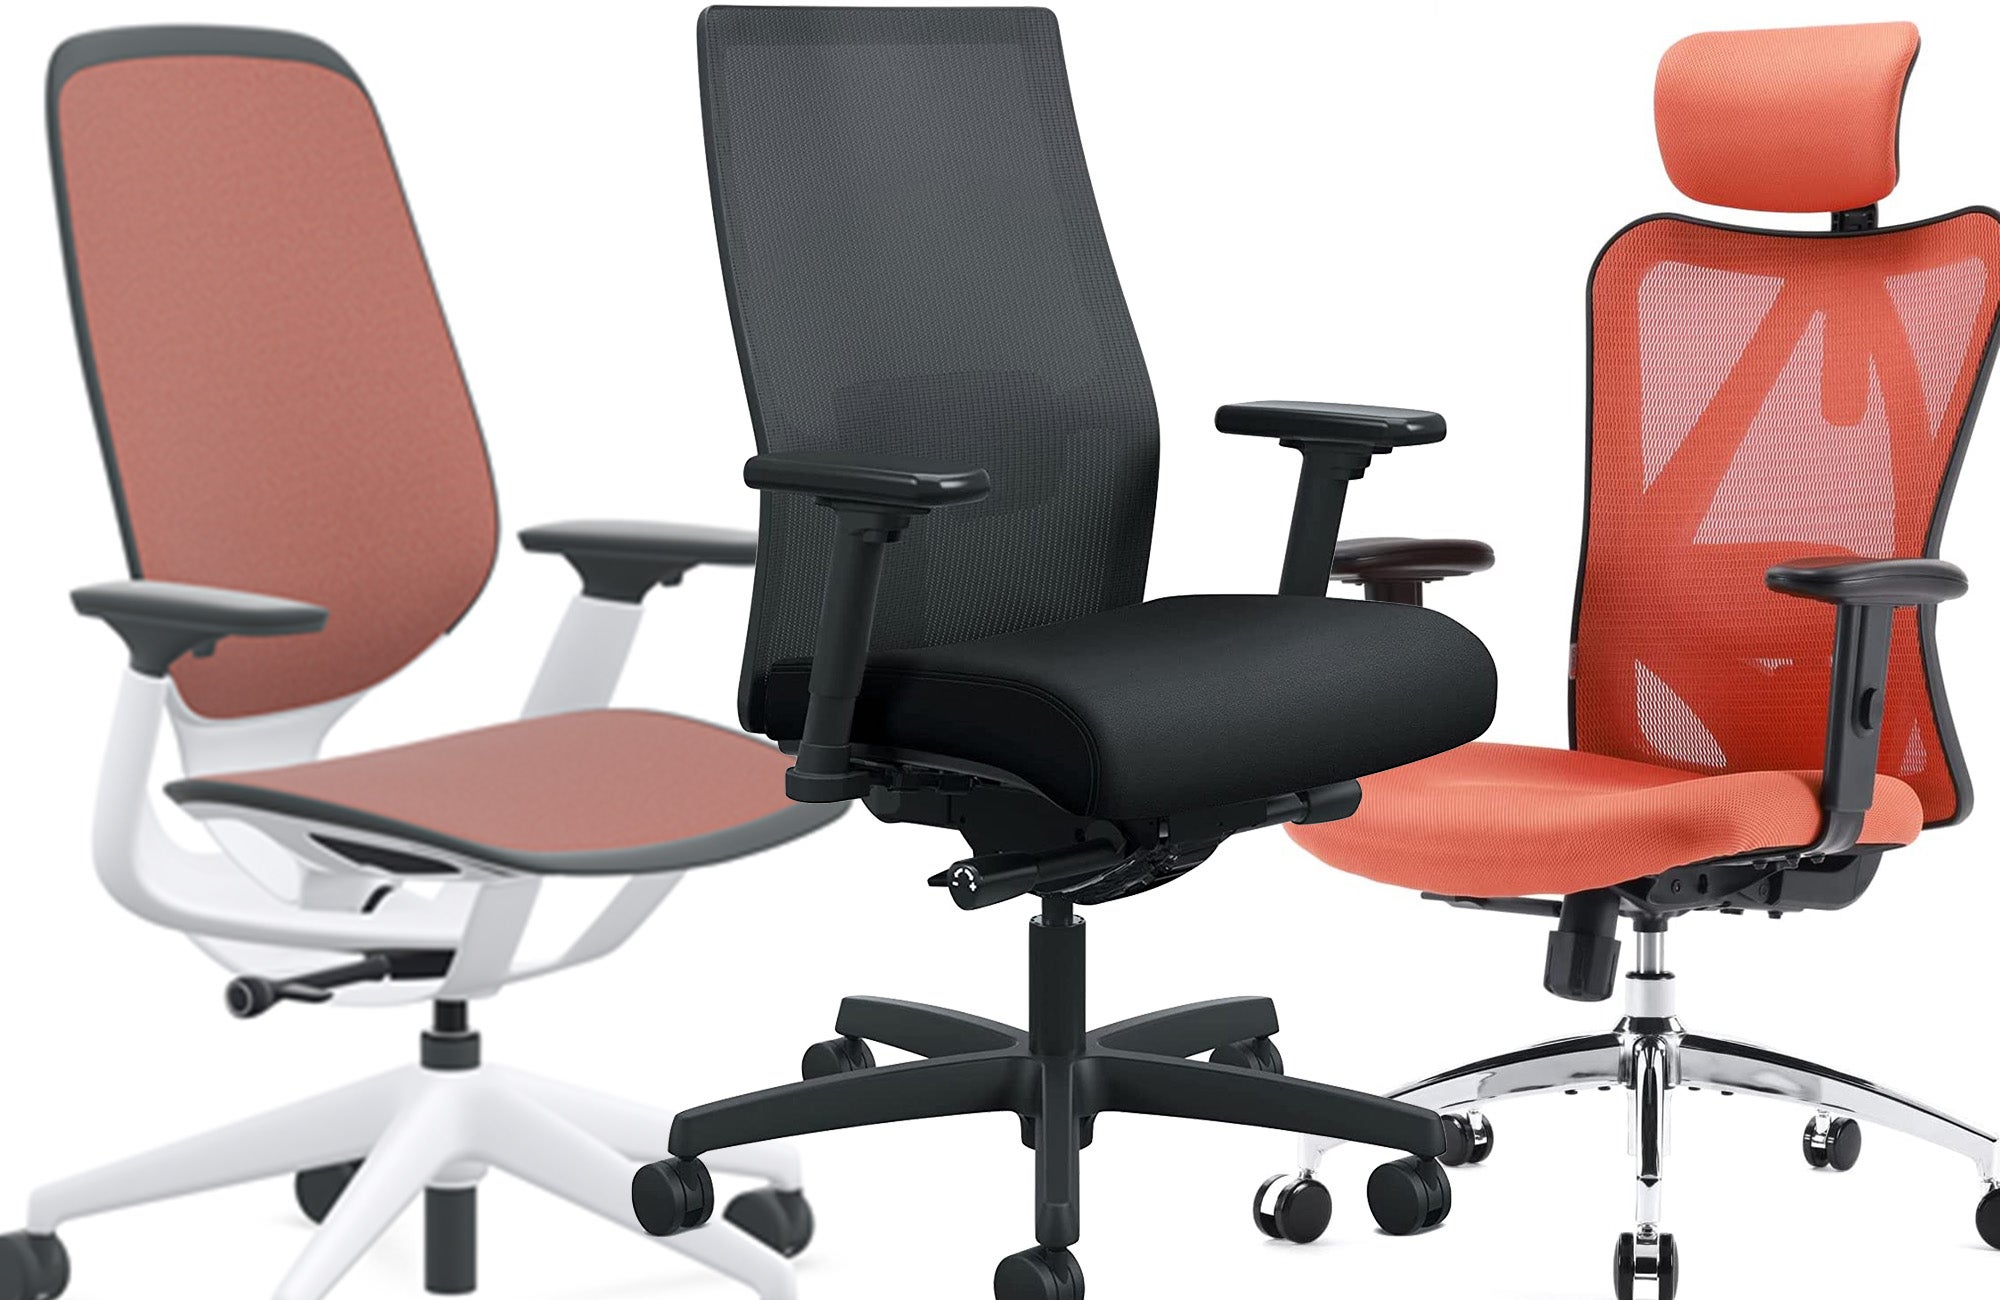 https://www.popsci.com/uploads/2021/05/05/best-ergonomic-chairs.jpg?auto=webp